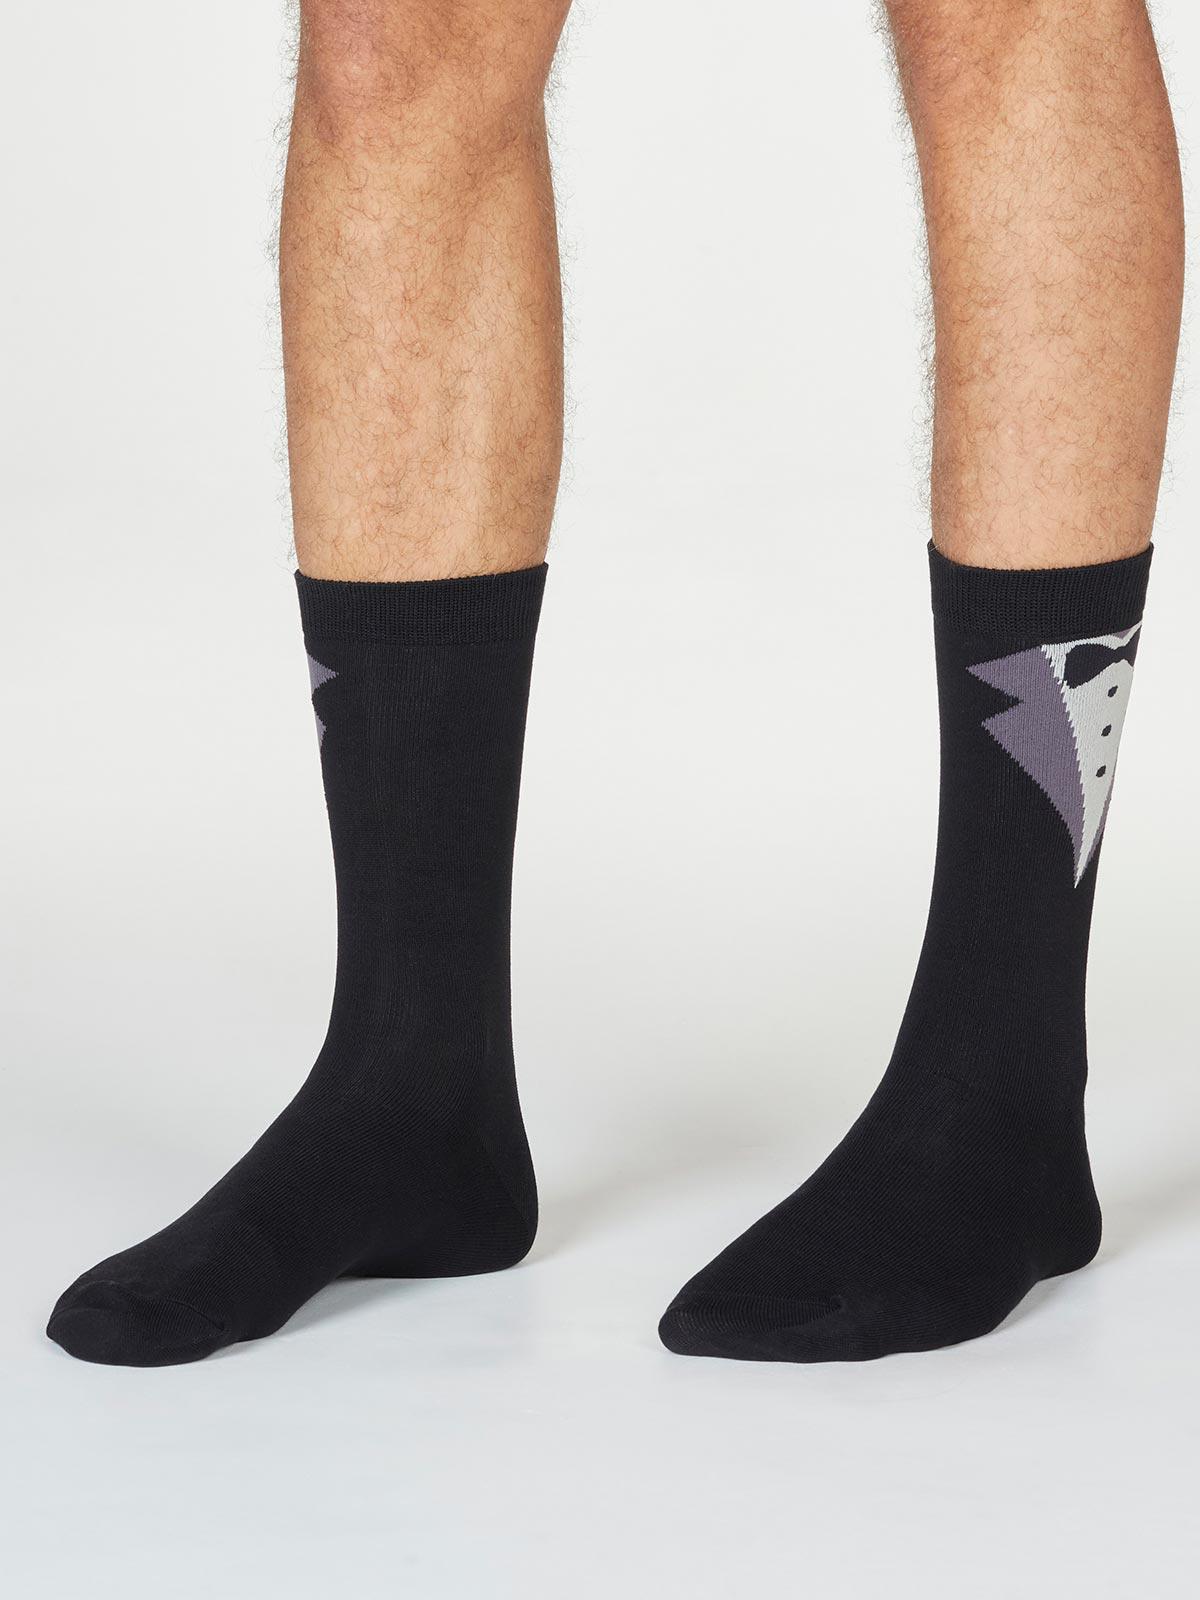 Frederik Tux Socks In A Bag - Black - Thought Clothing UK